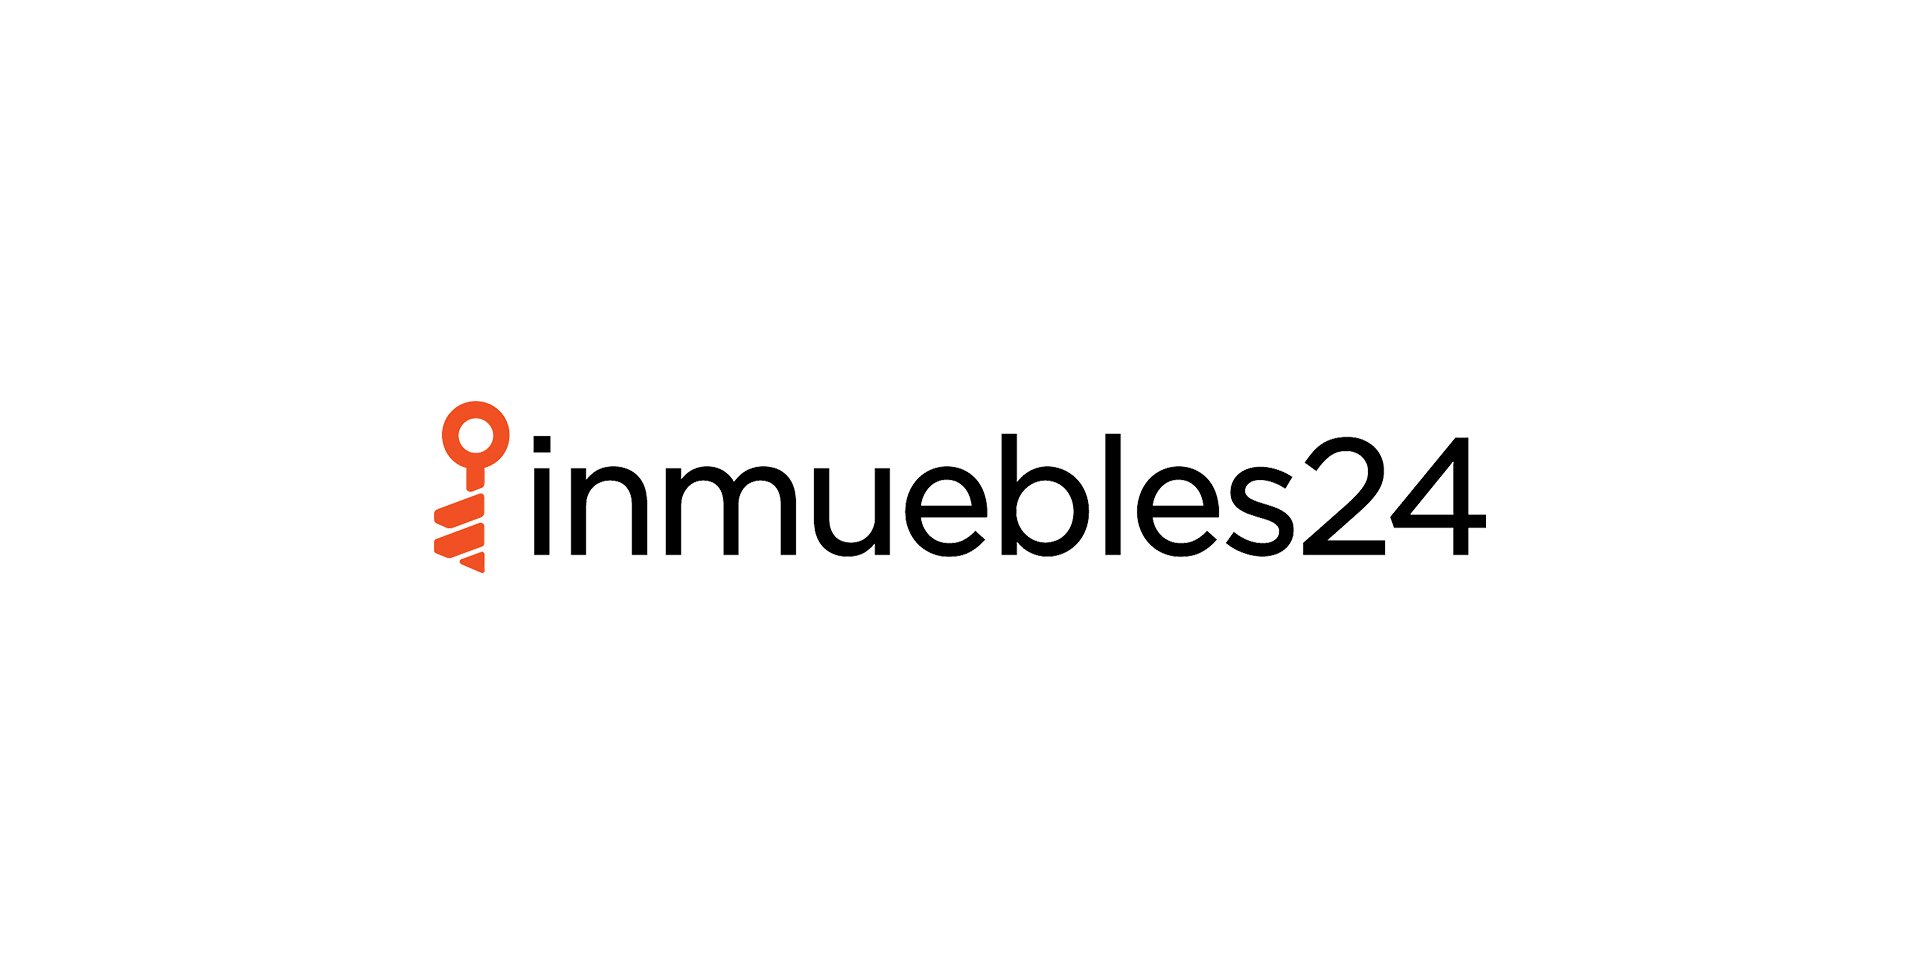 inmuebles 24